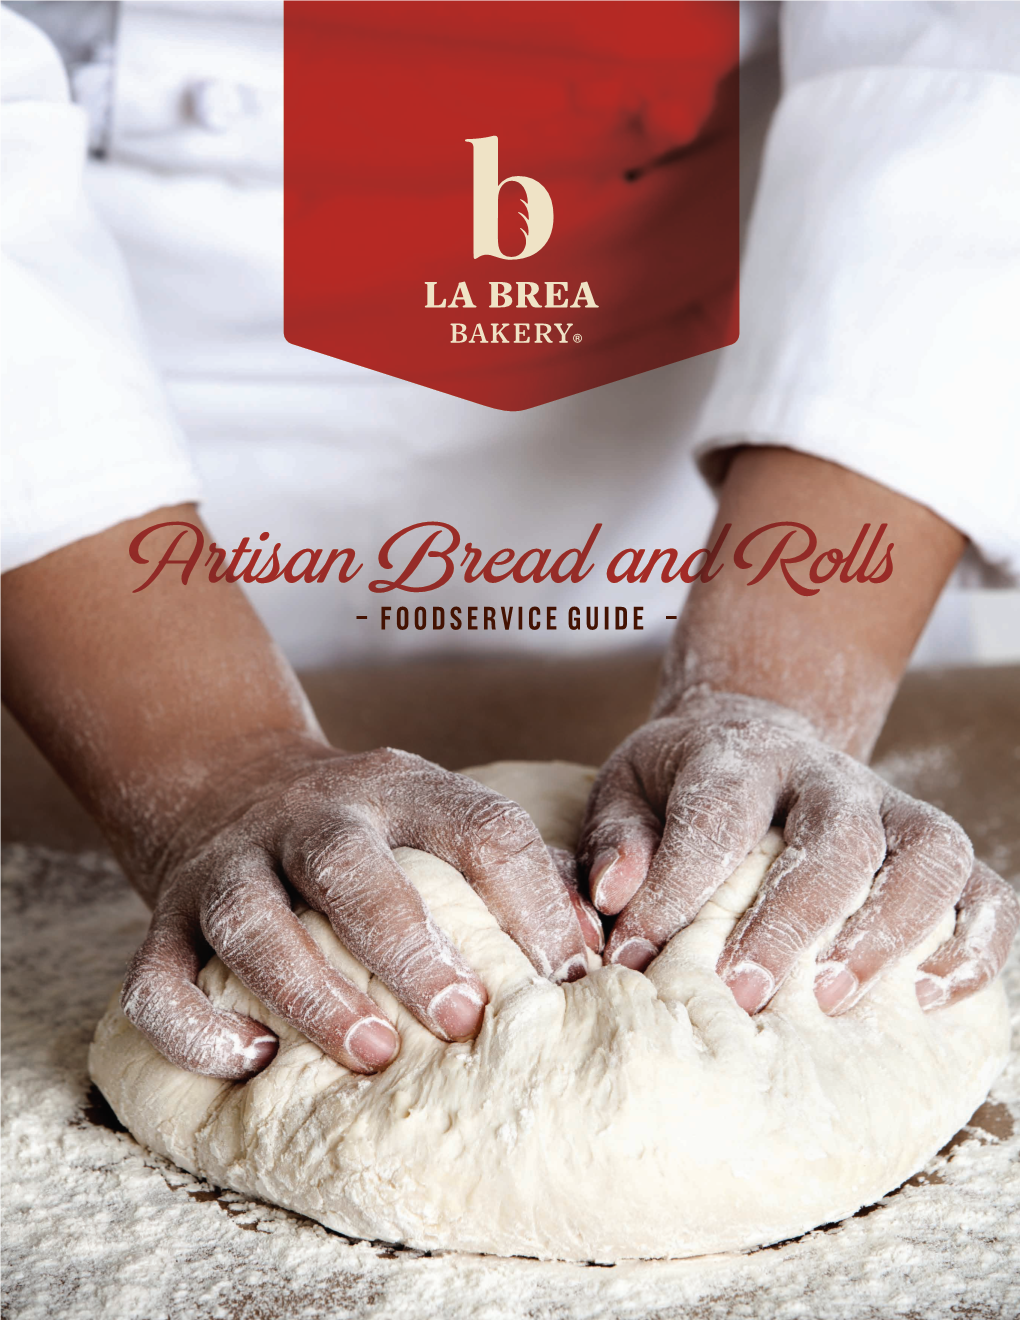 Artisan Bread and Rolls